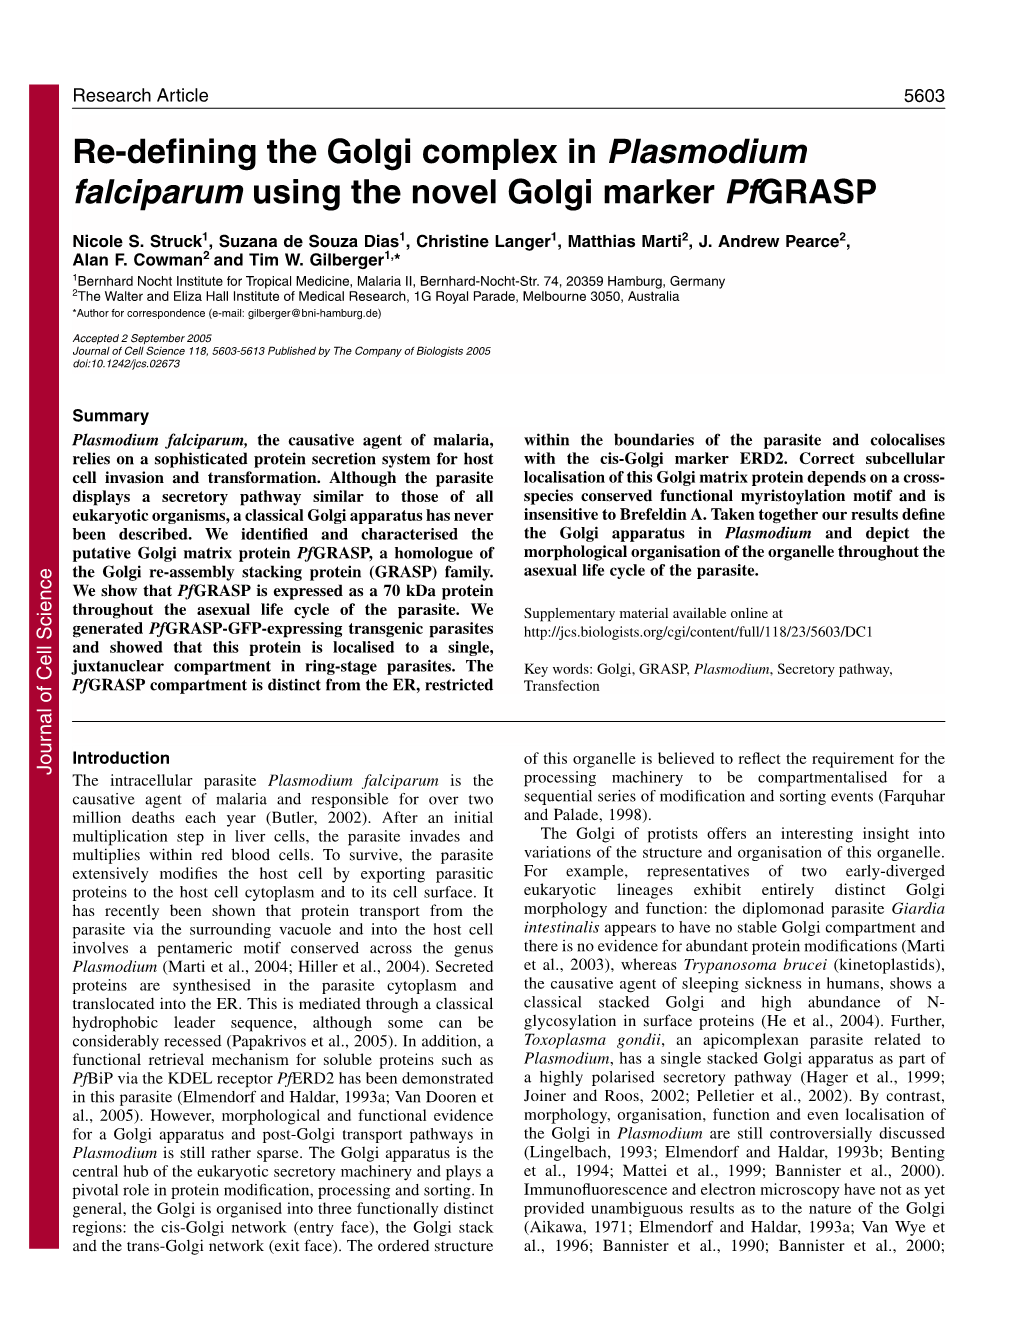 Re-Defining the Golgi Complex in Plasmodium Falciparum Using the Novel Golgi Marker Pfgrasp